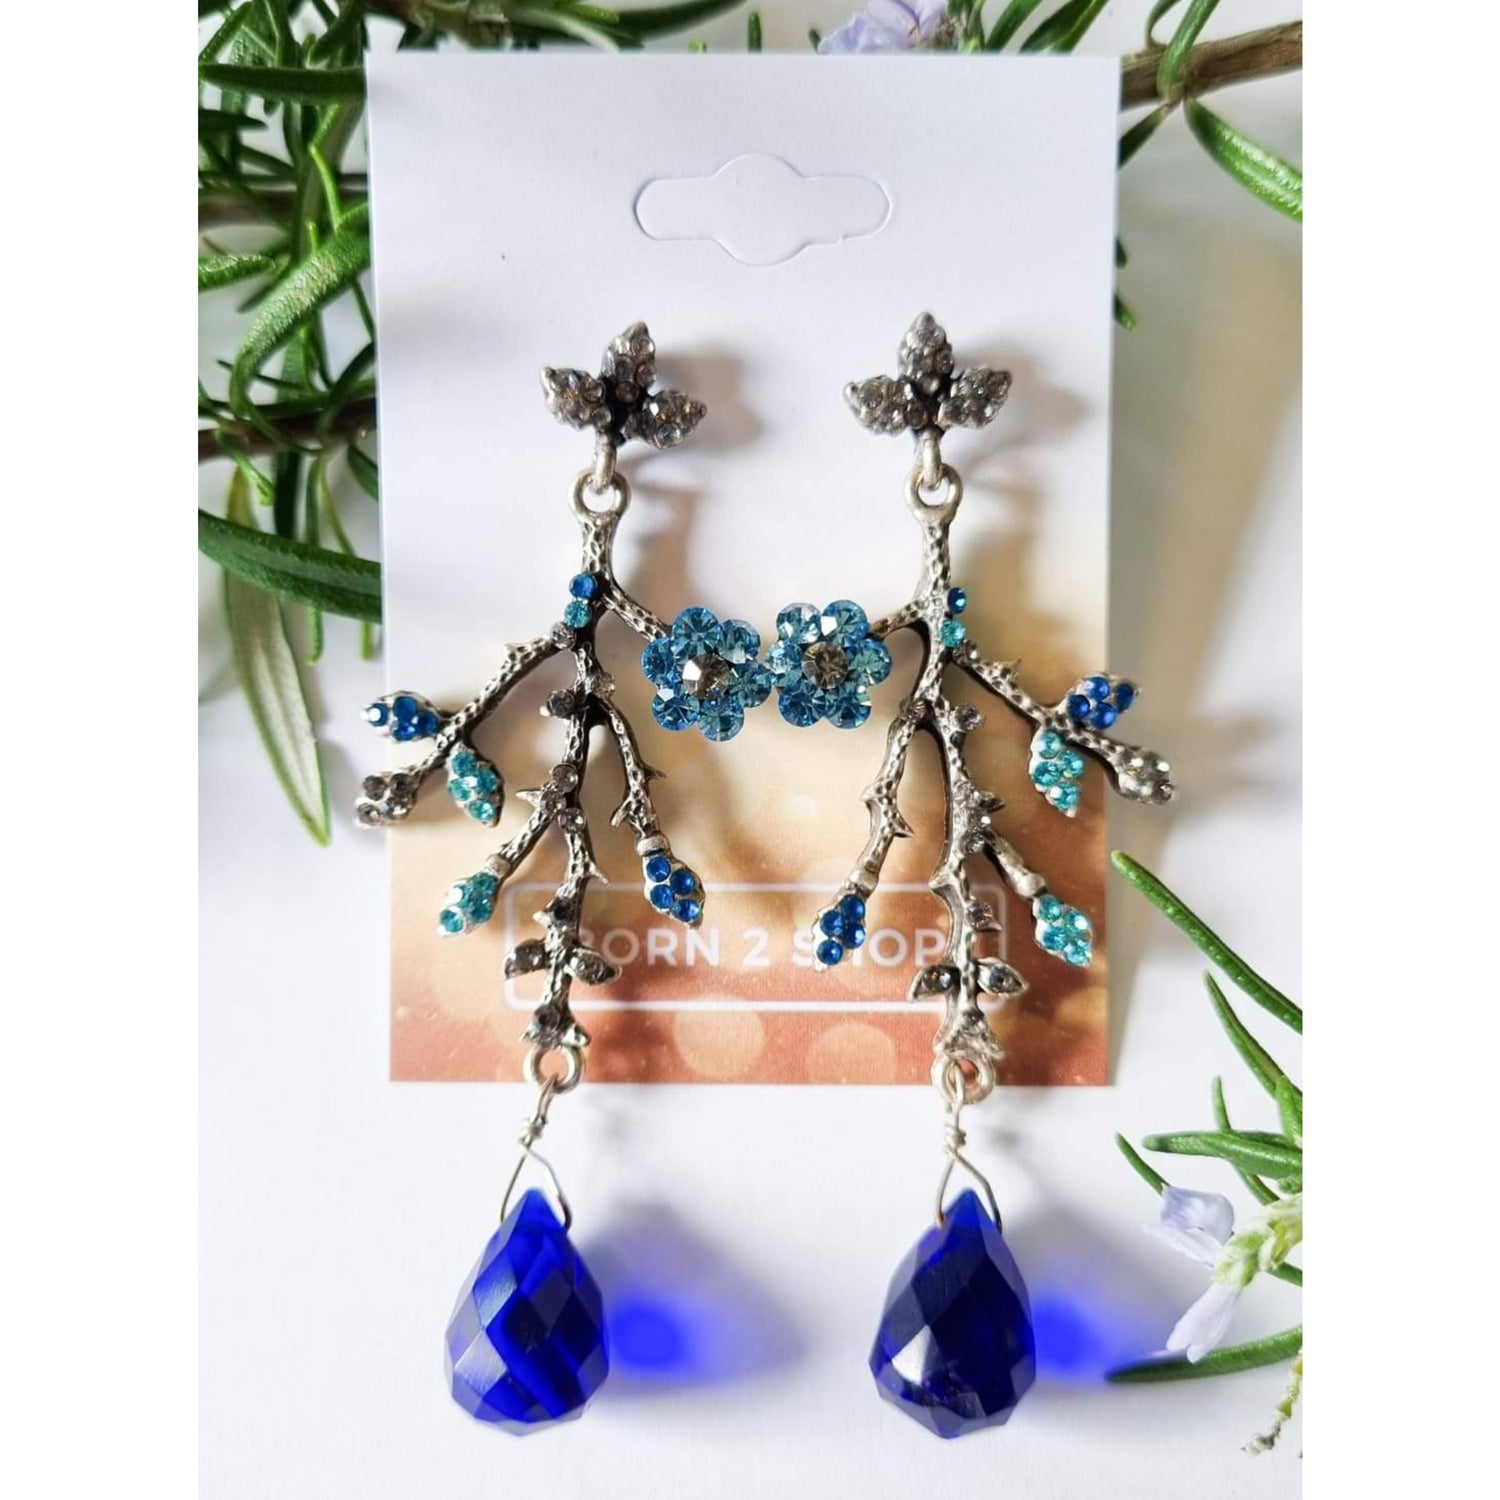 Milano Swarovski Floral Earrings - Blue